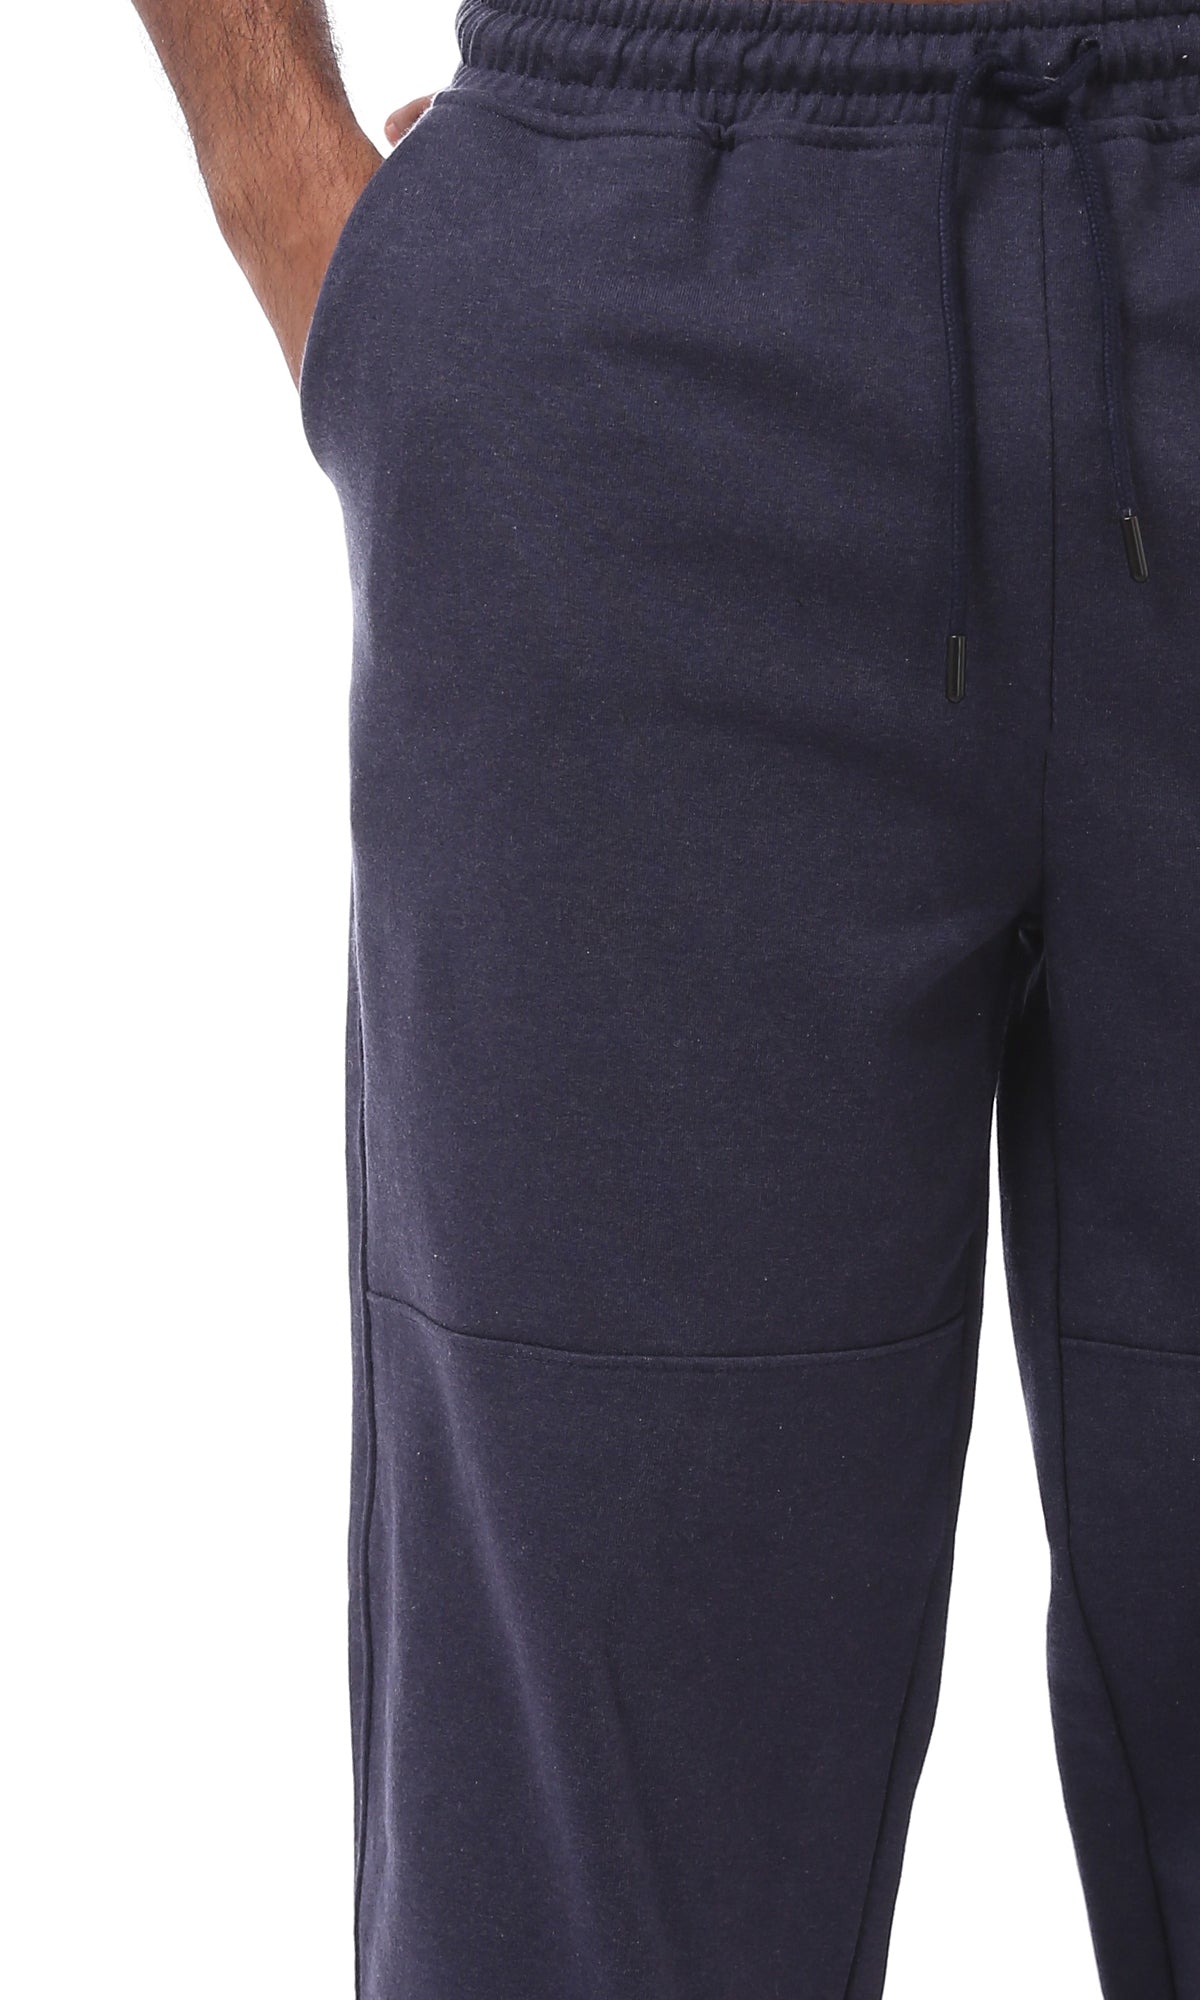 O174891 Slip On Heather Navy Blue Comfy Pants